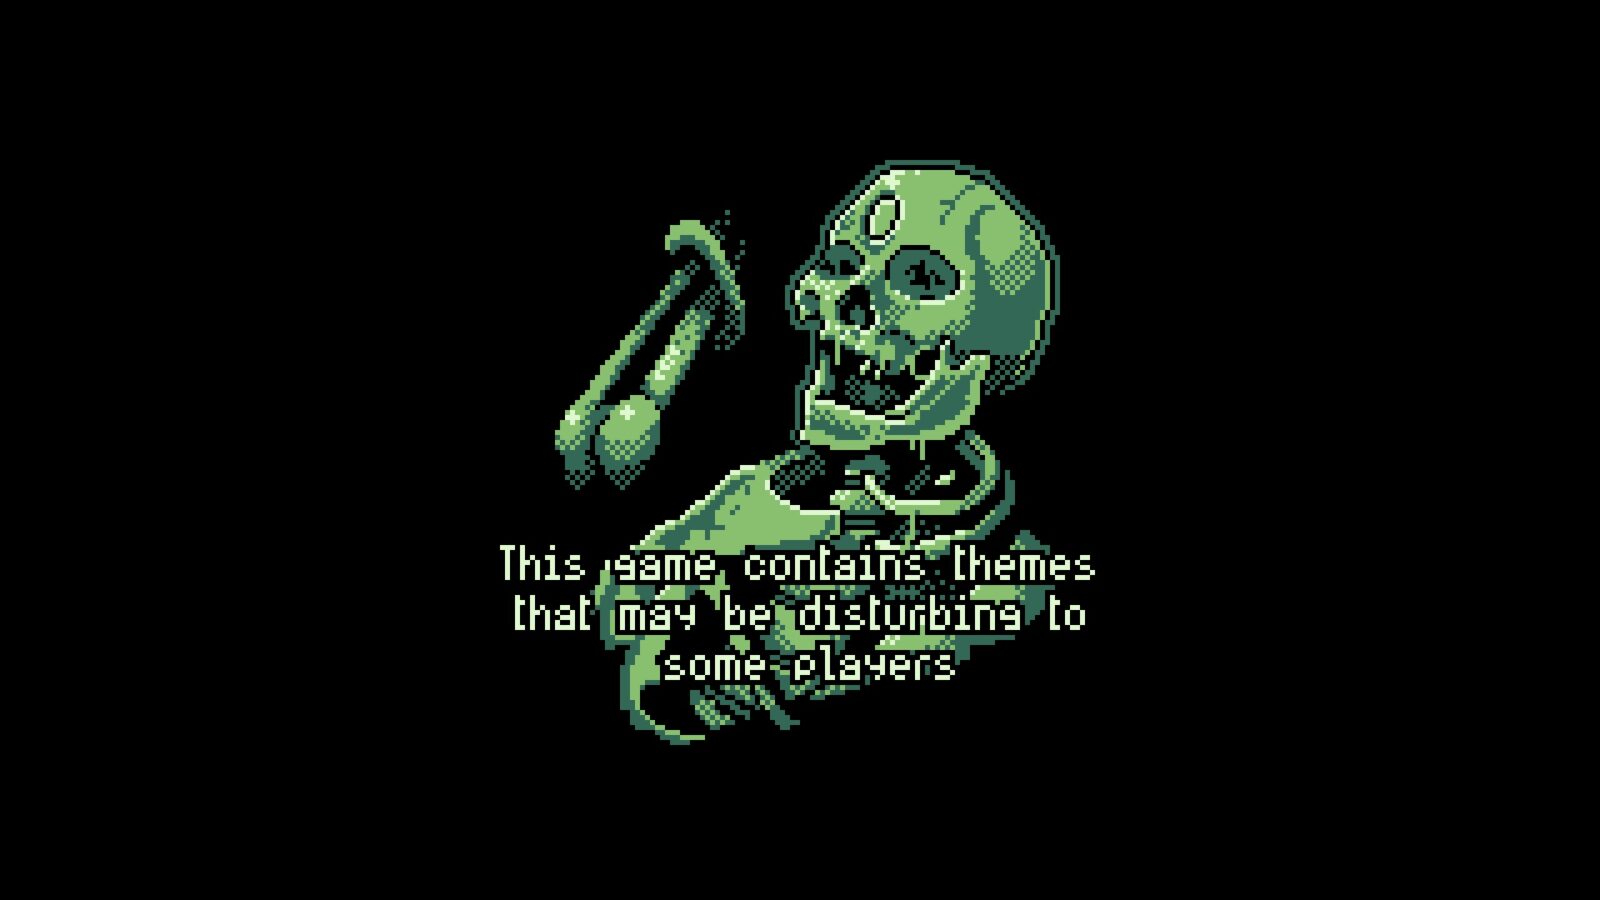 Game Boy Mendapatkan Game Fisik Baru, Deadeus